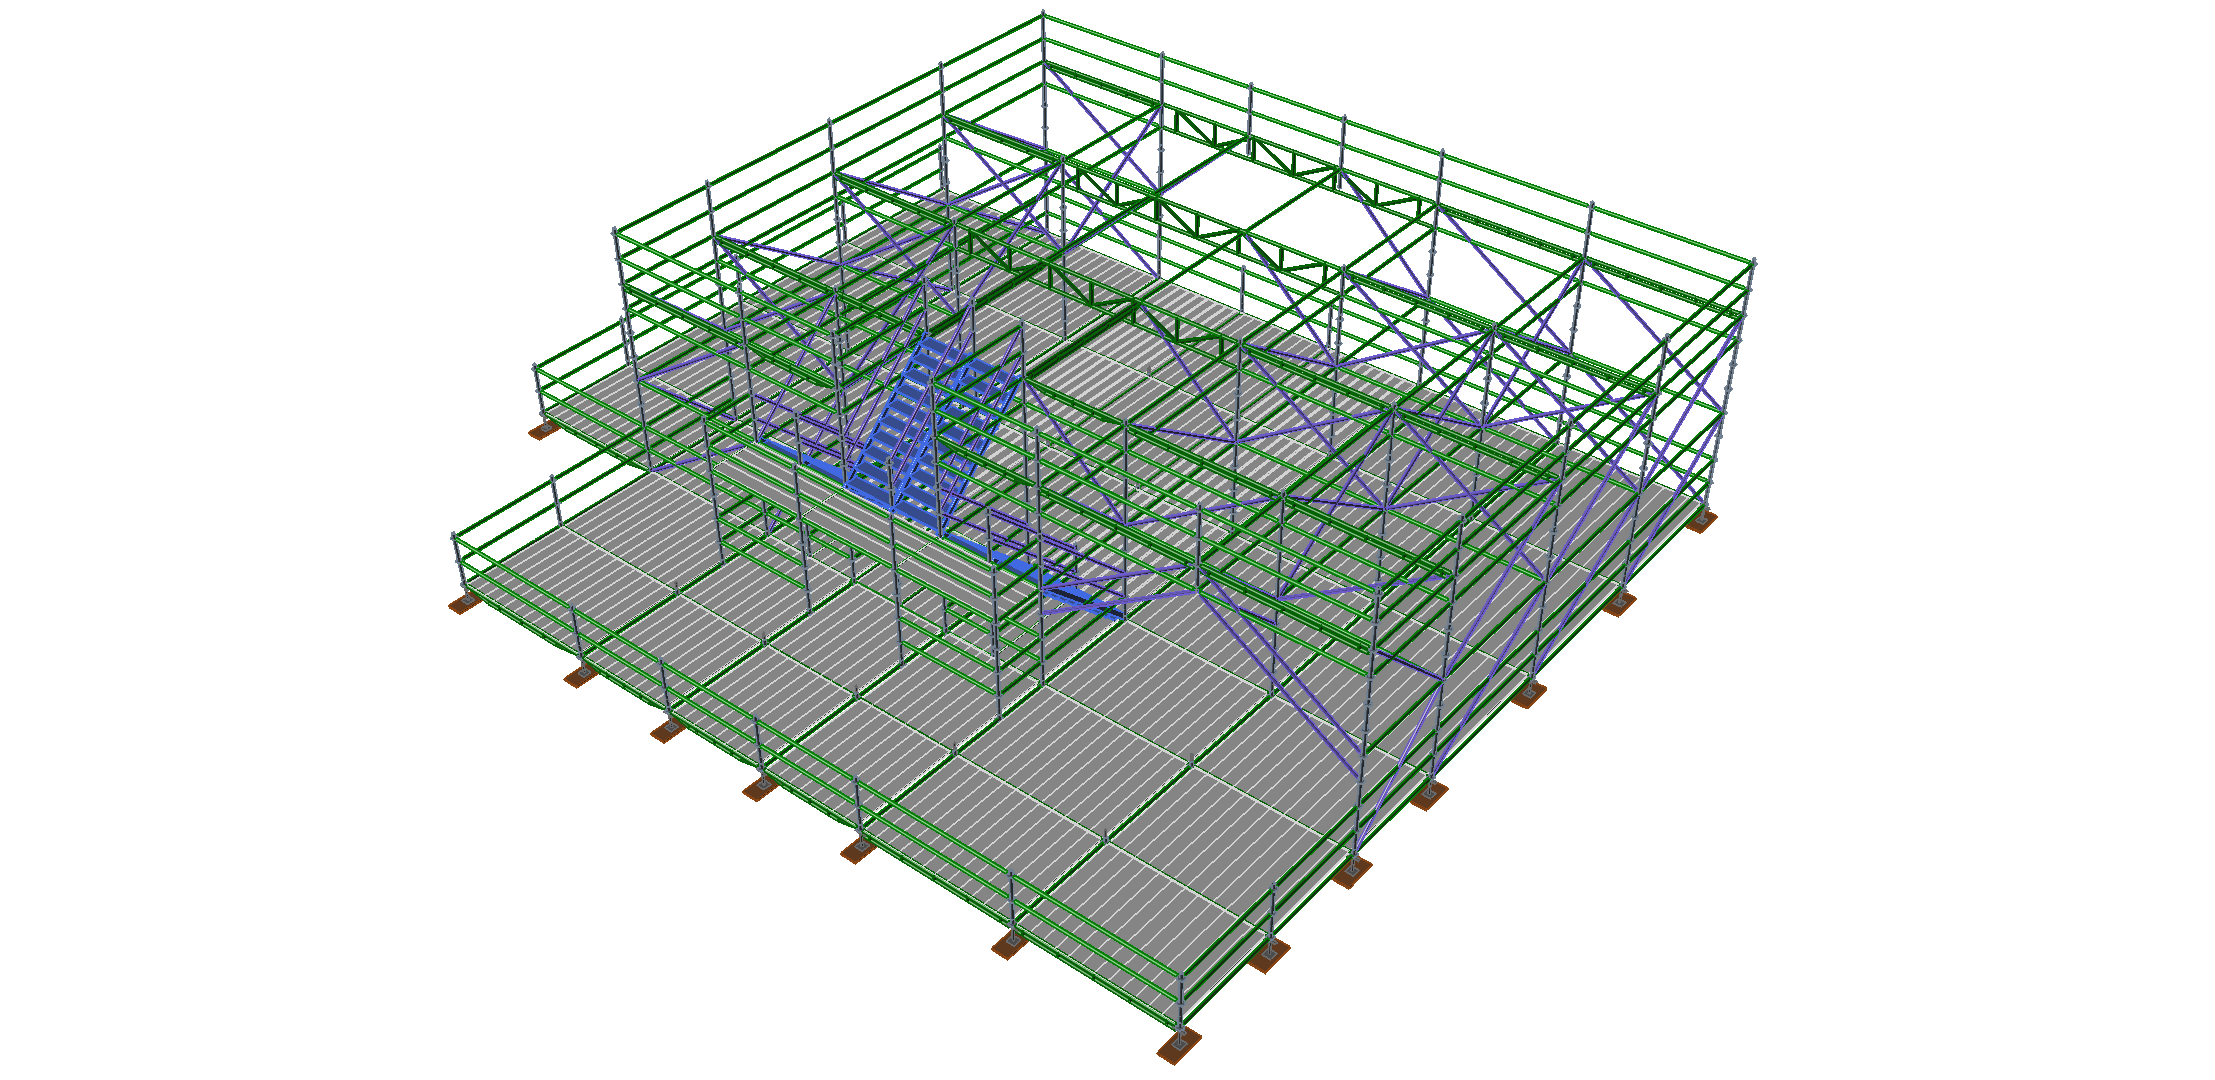 3D scaffolding model created using Avontus Designer.